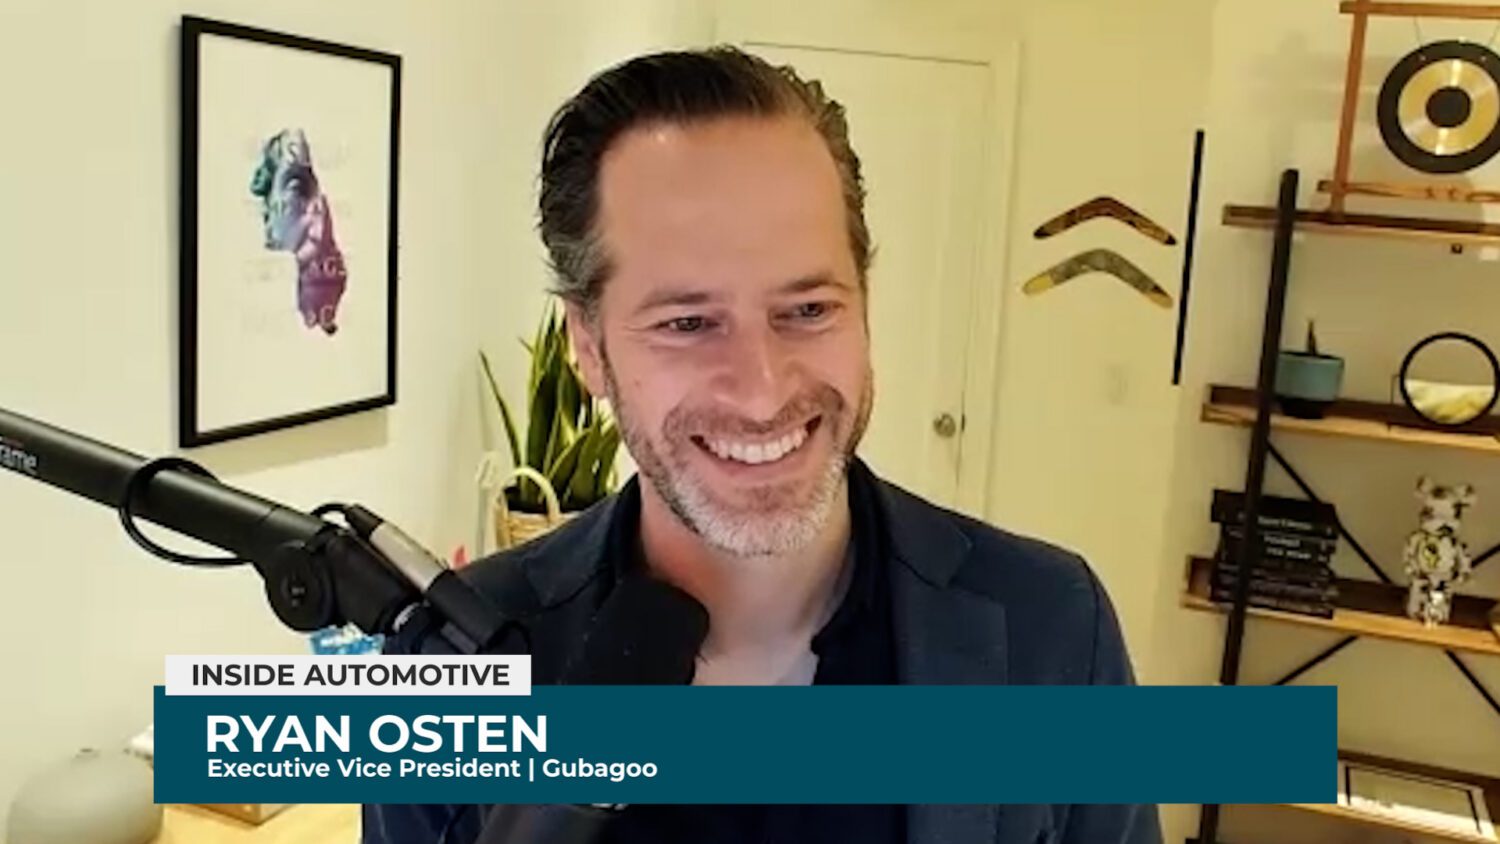 Ryan Osten joins Inside Automotive to discuss digital retail